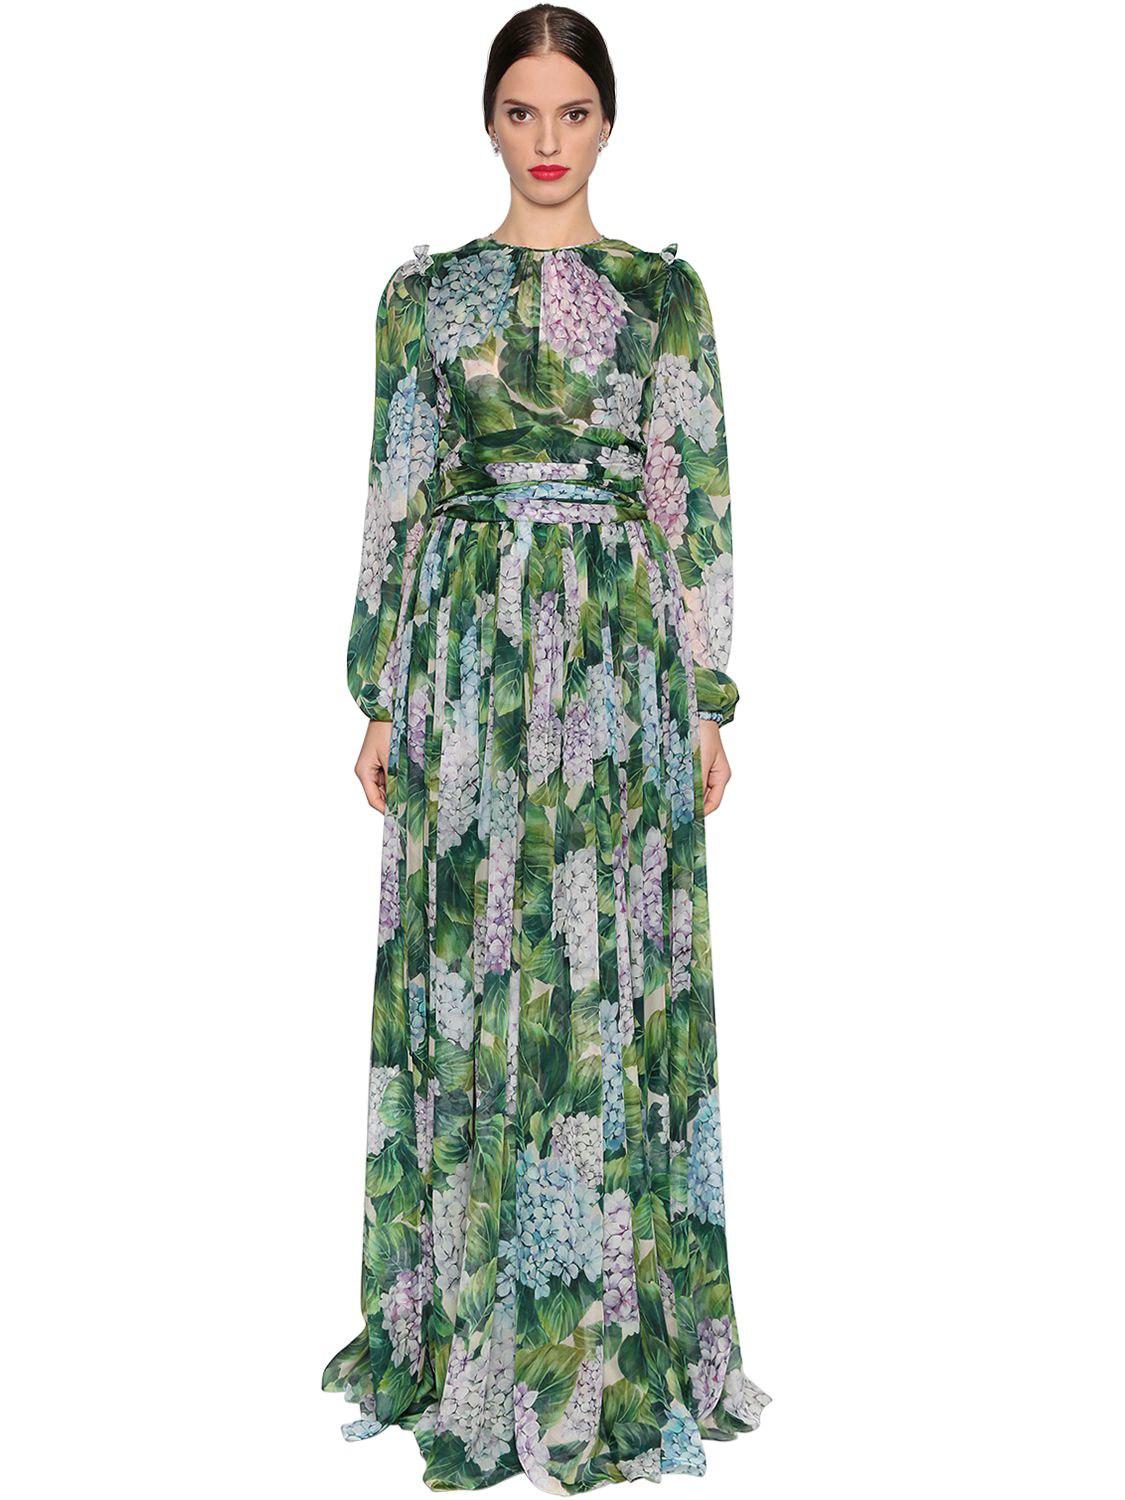 Dolce & Gabbana Hydrangea Printed Silk Chiffon Dress in Green | Lyst